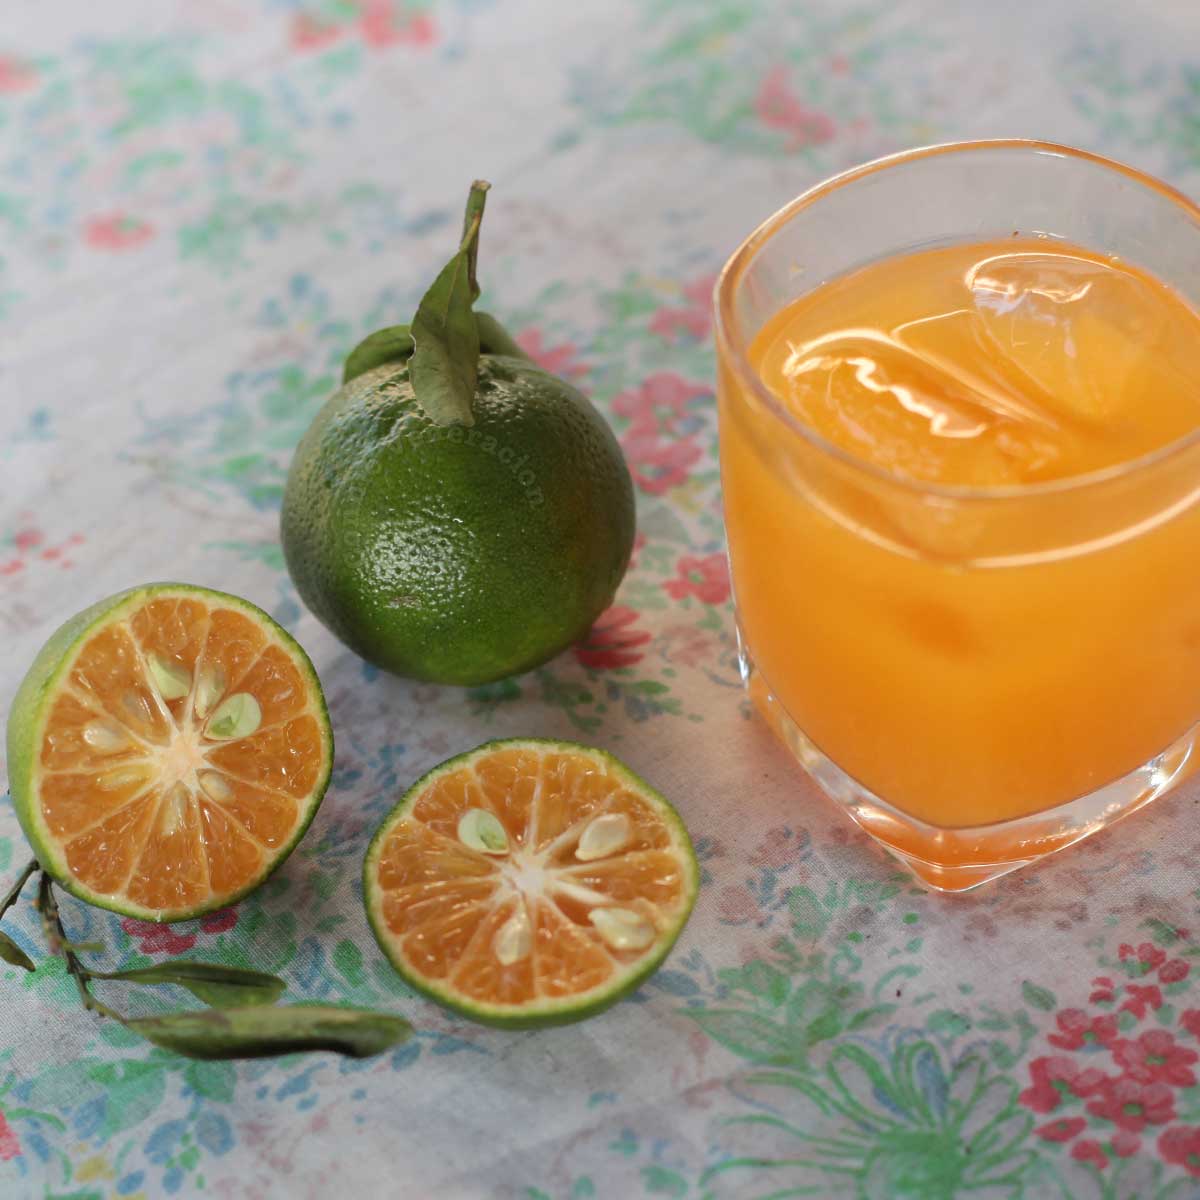 Freshly squeezed orange juice served with ice